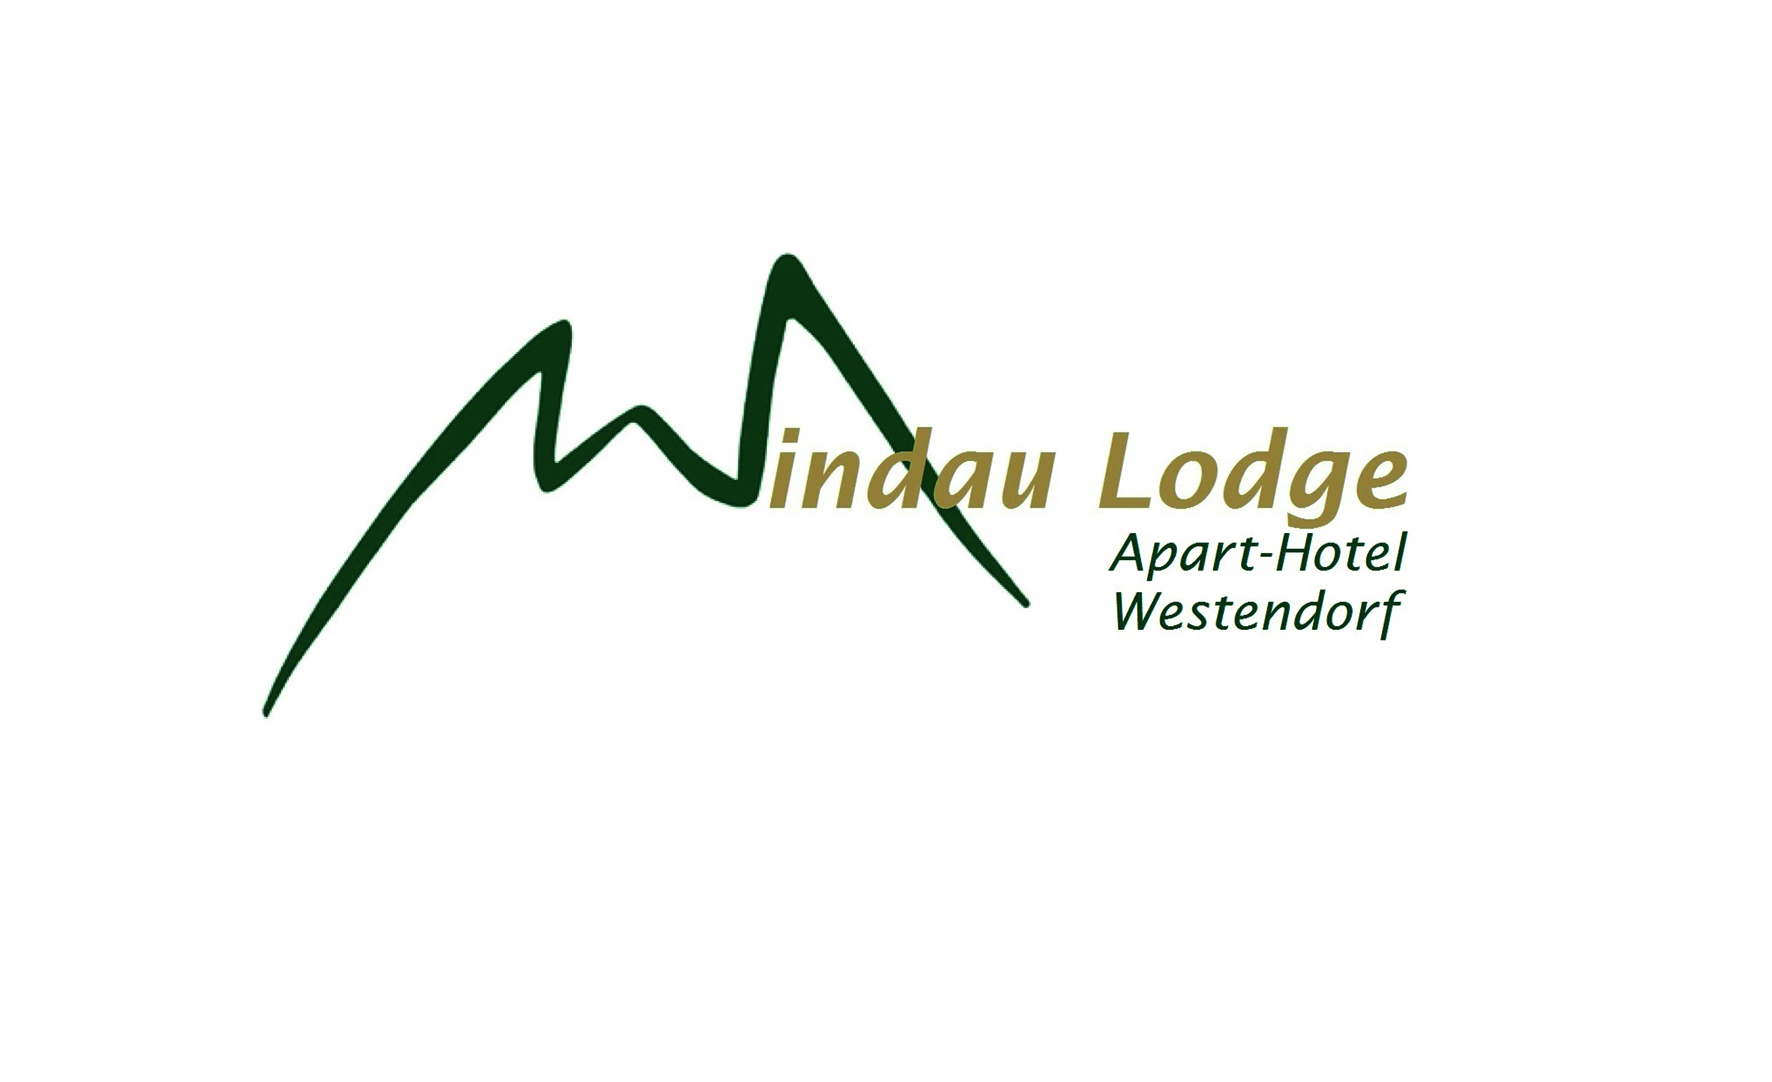 Windau Lodge